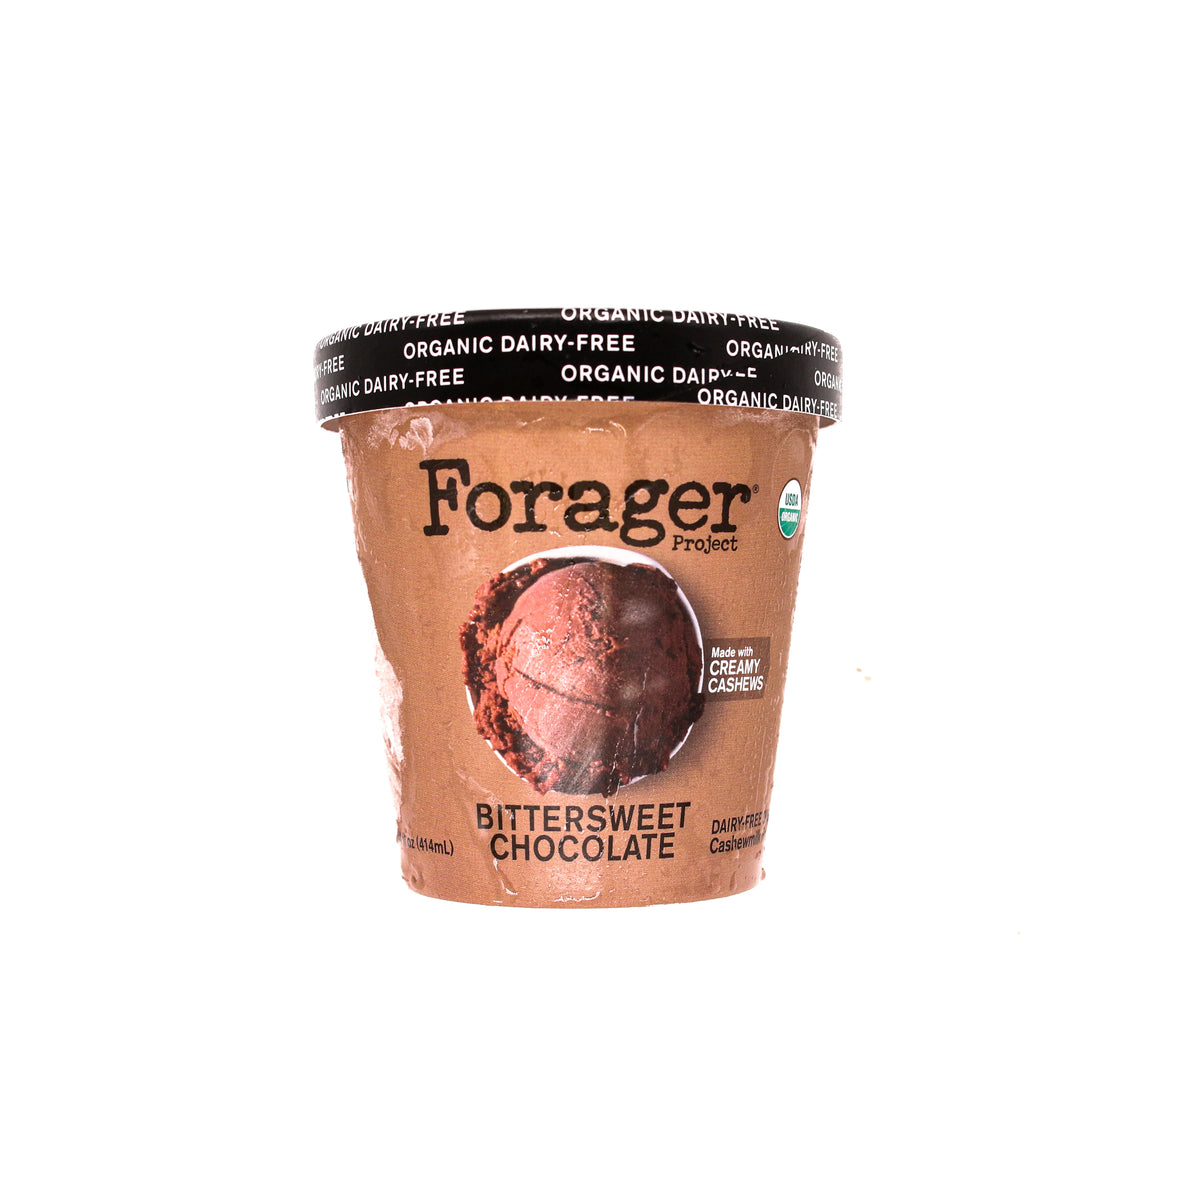 Forager Ice Cream Bittersweet Chocolate